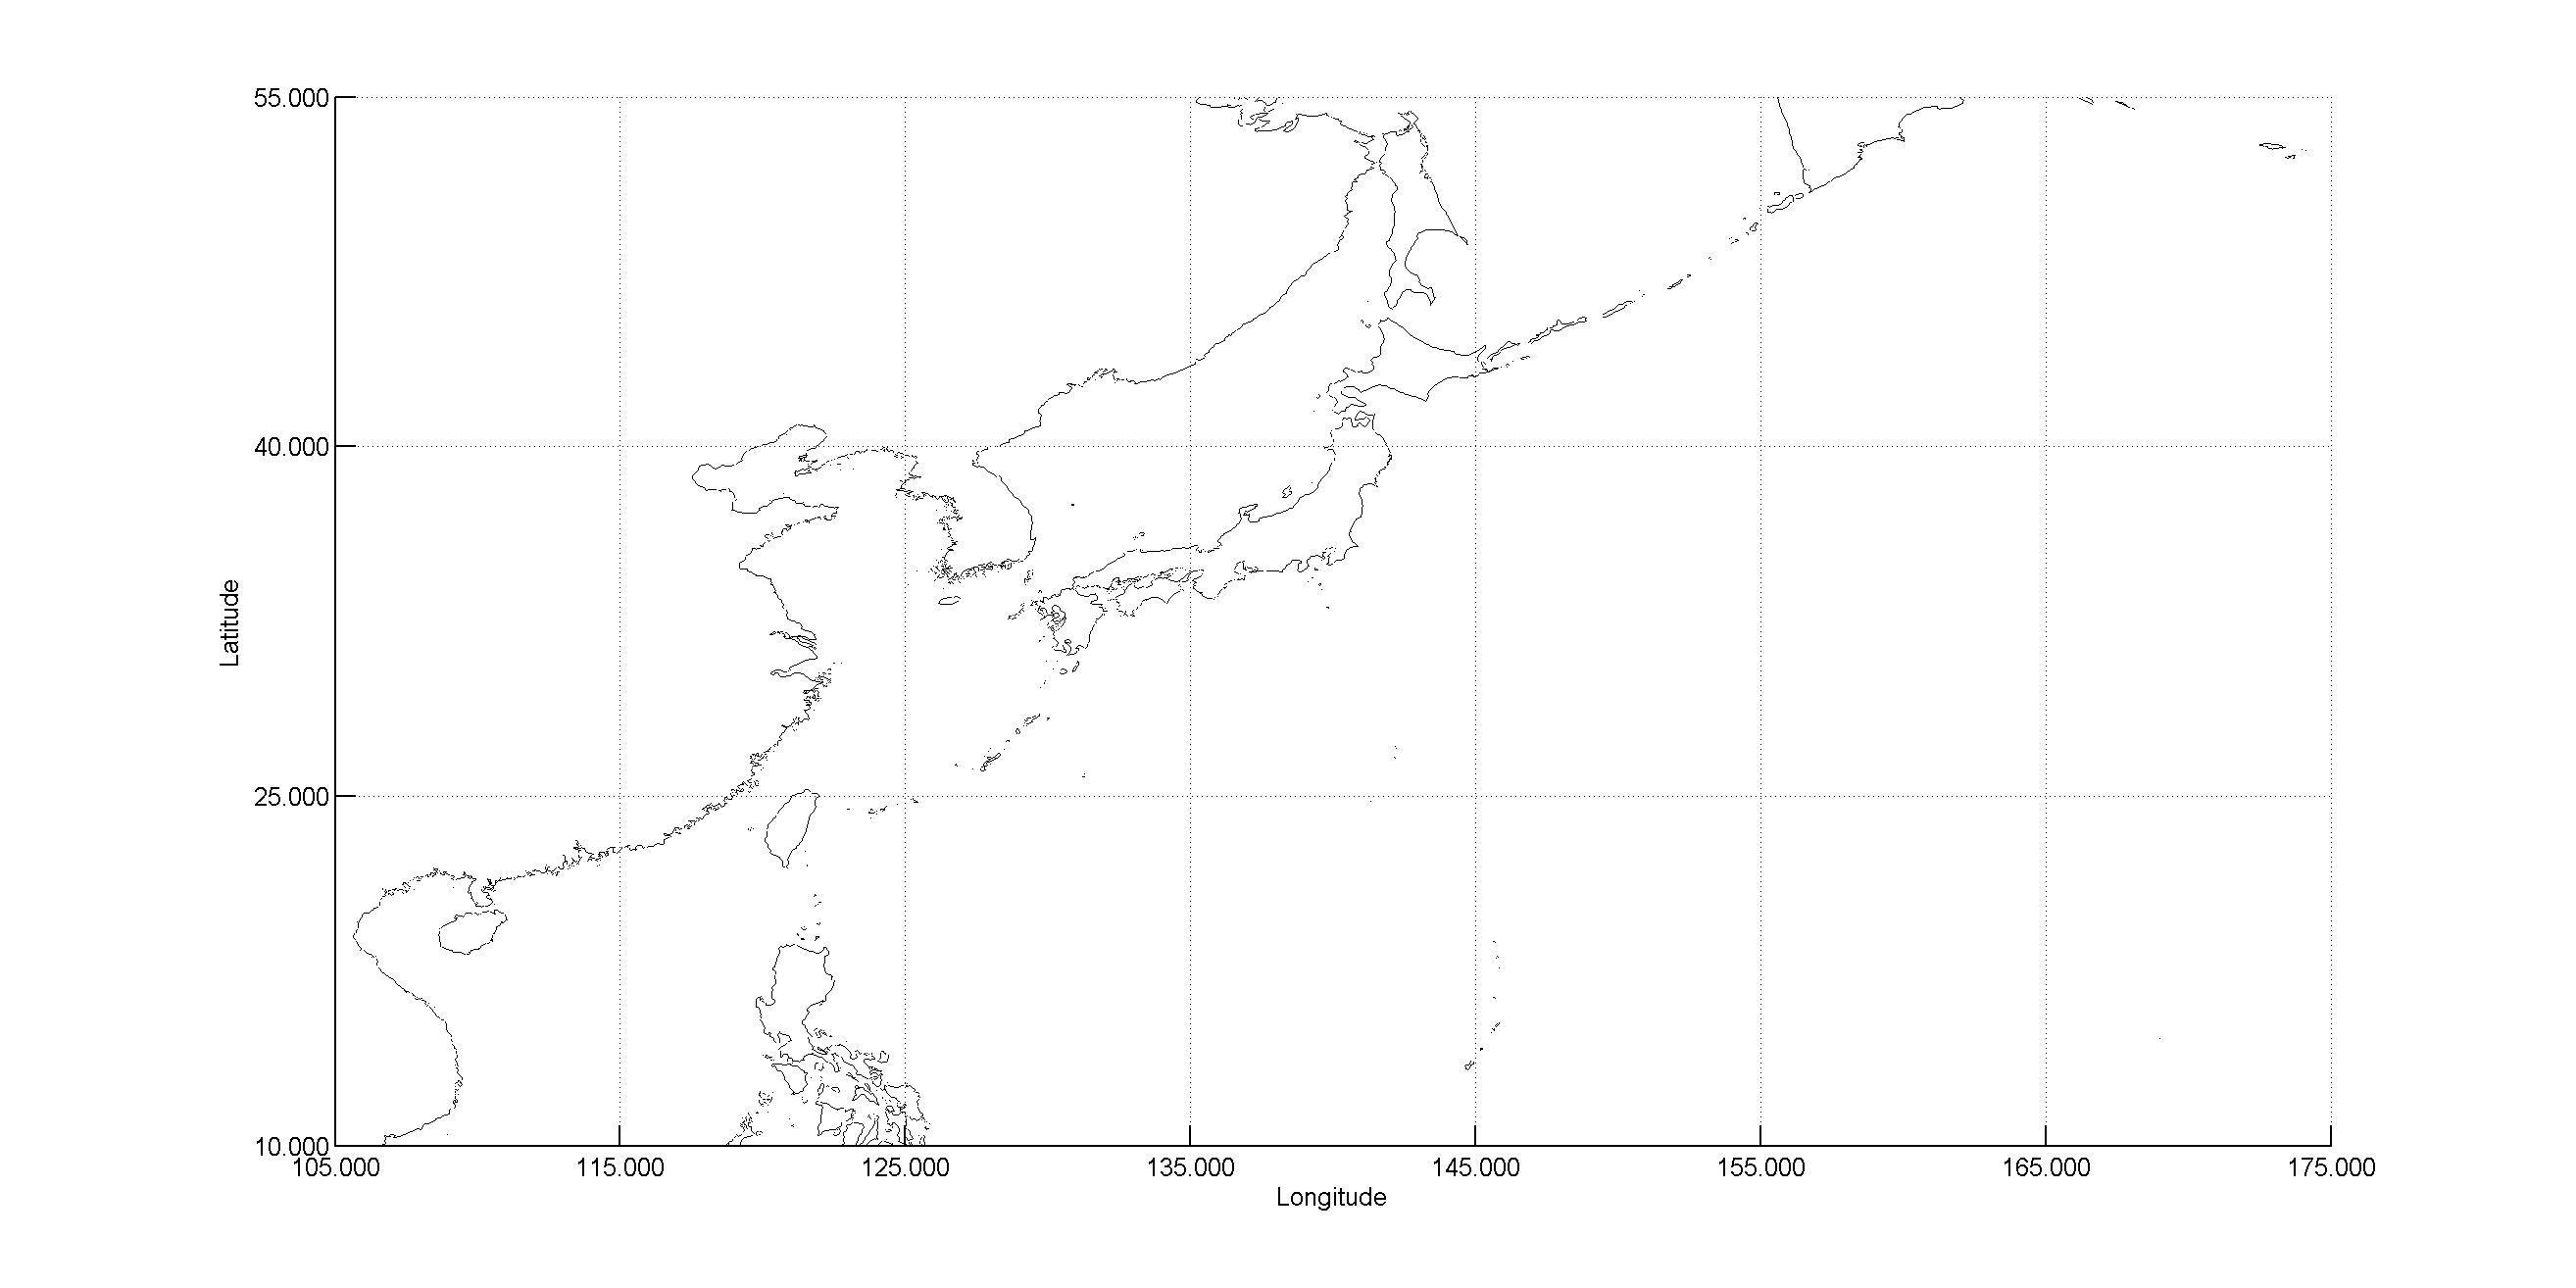 CYCLE_203 - Japan Descending passes